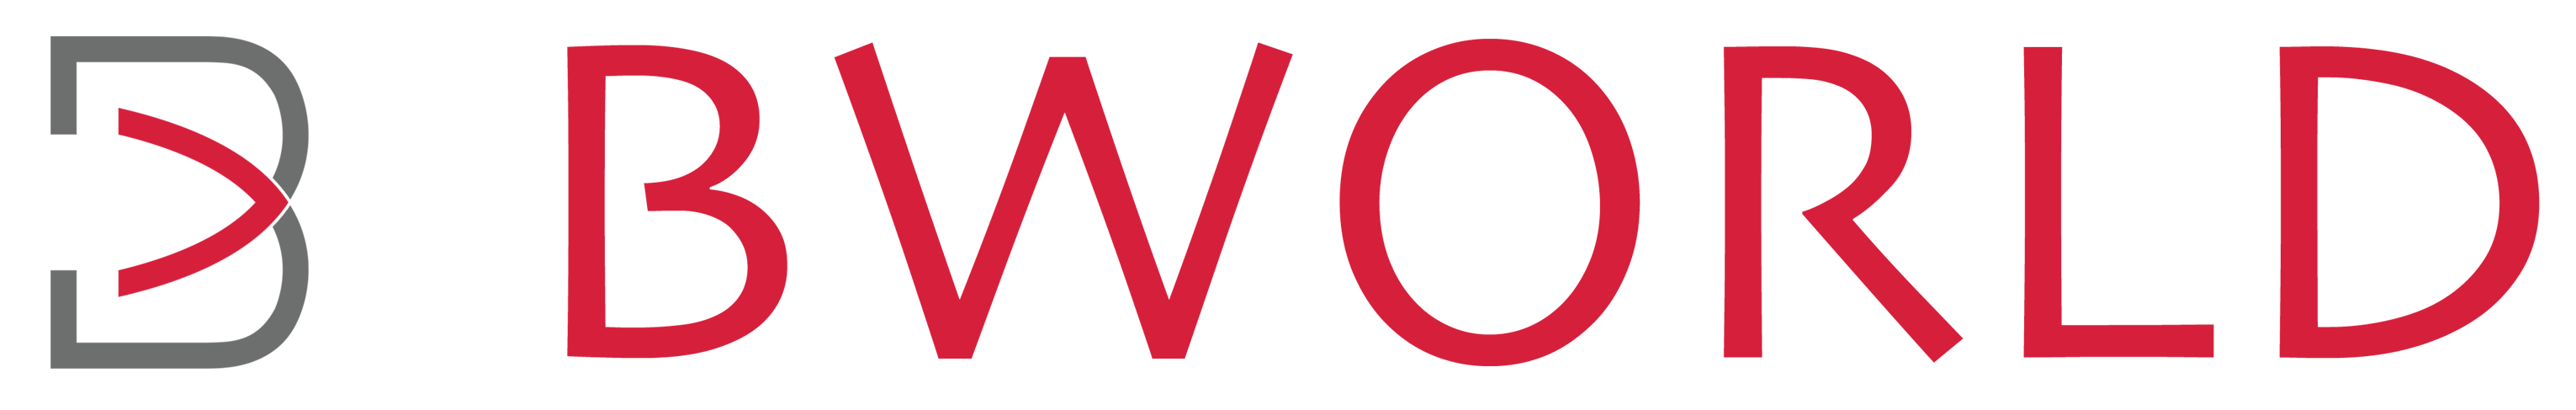 bworld logo2